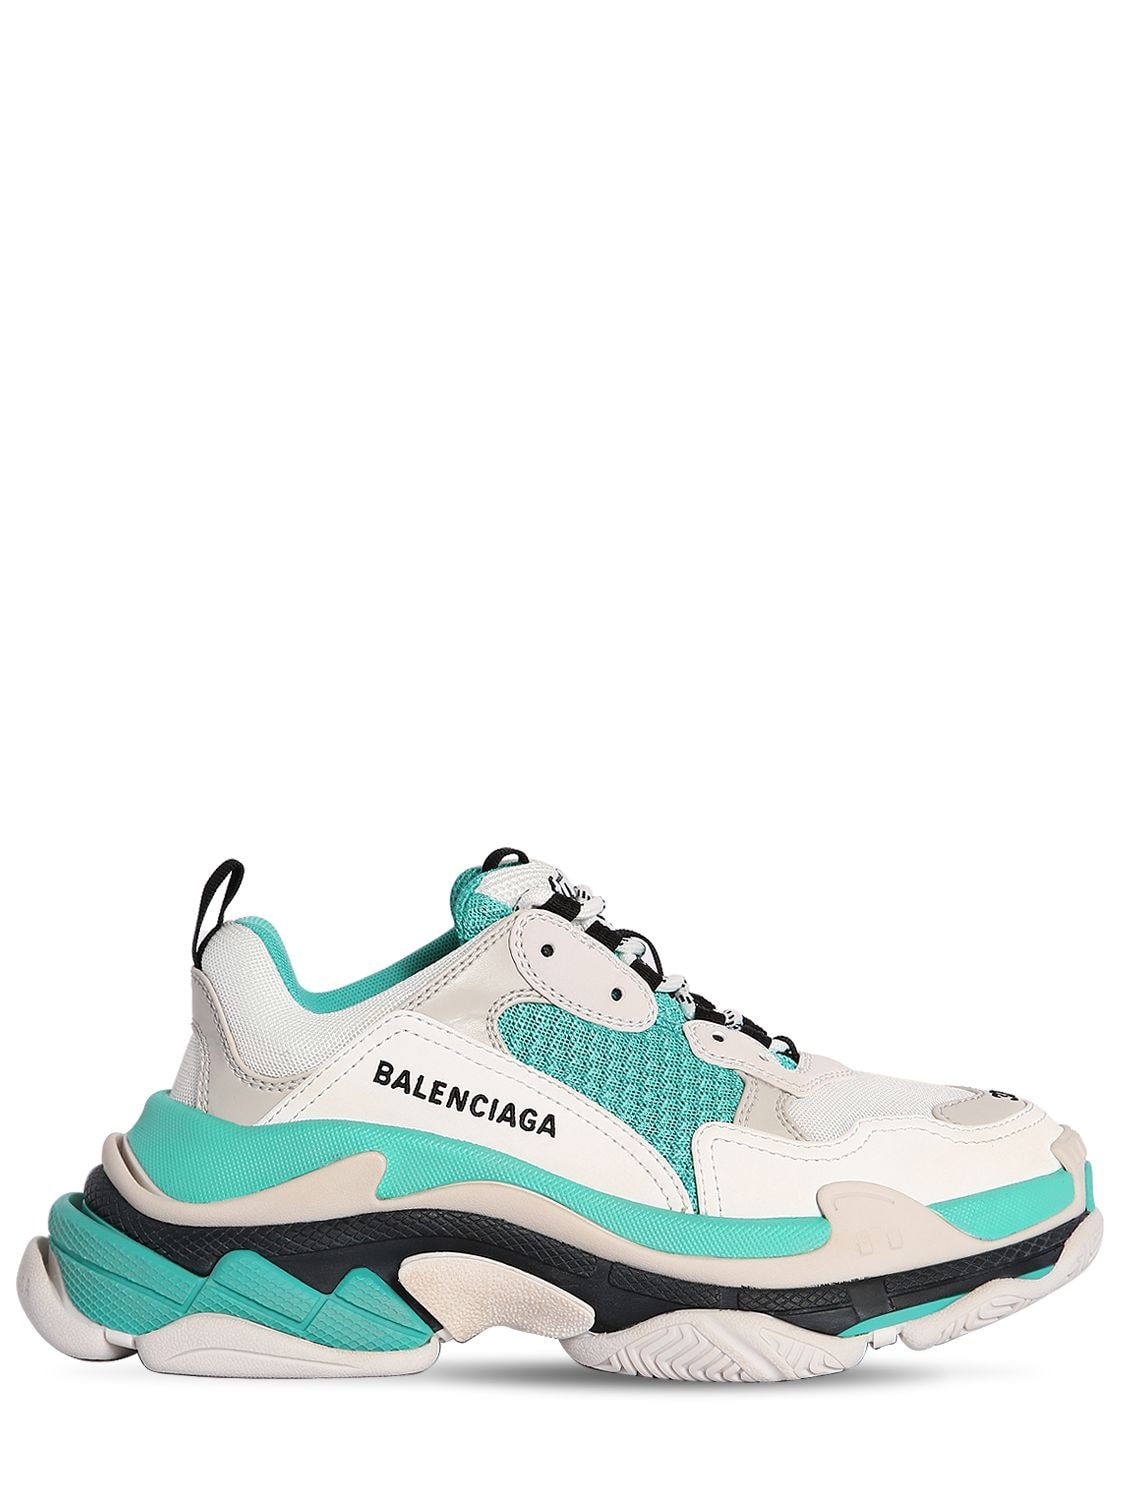 Balenciaga Balenciaga Triple S Sneakers White blue italist